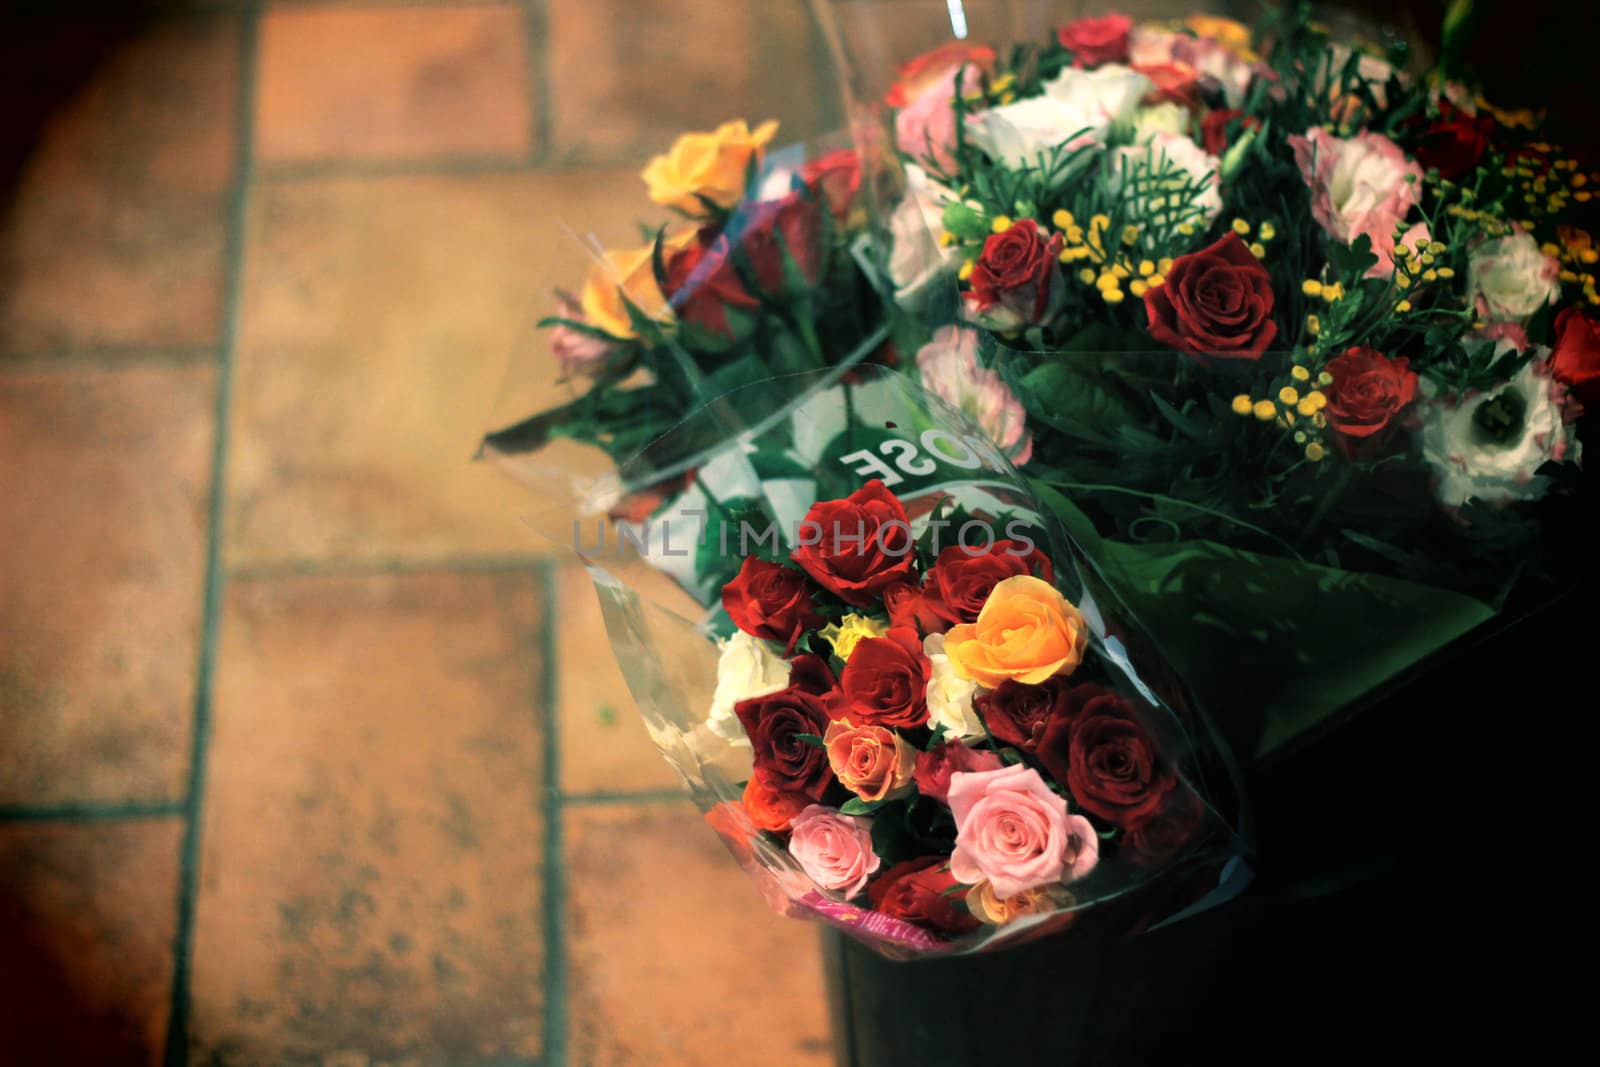 romantic rose flower bouquets by malenaromano